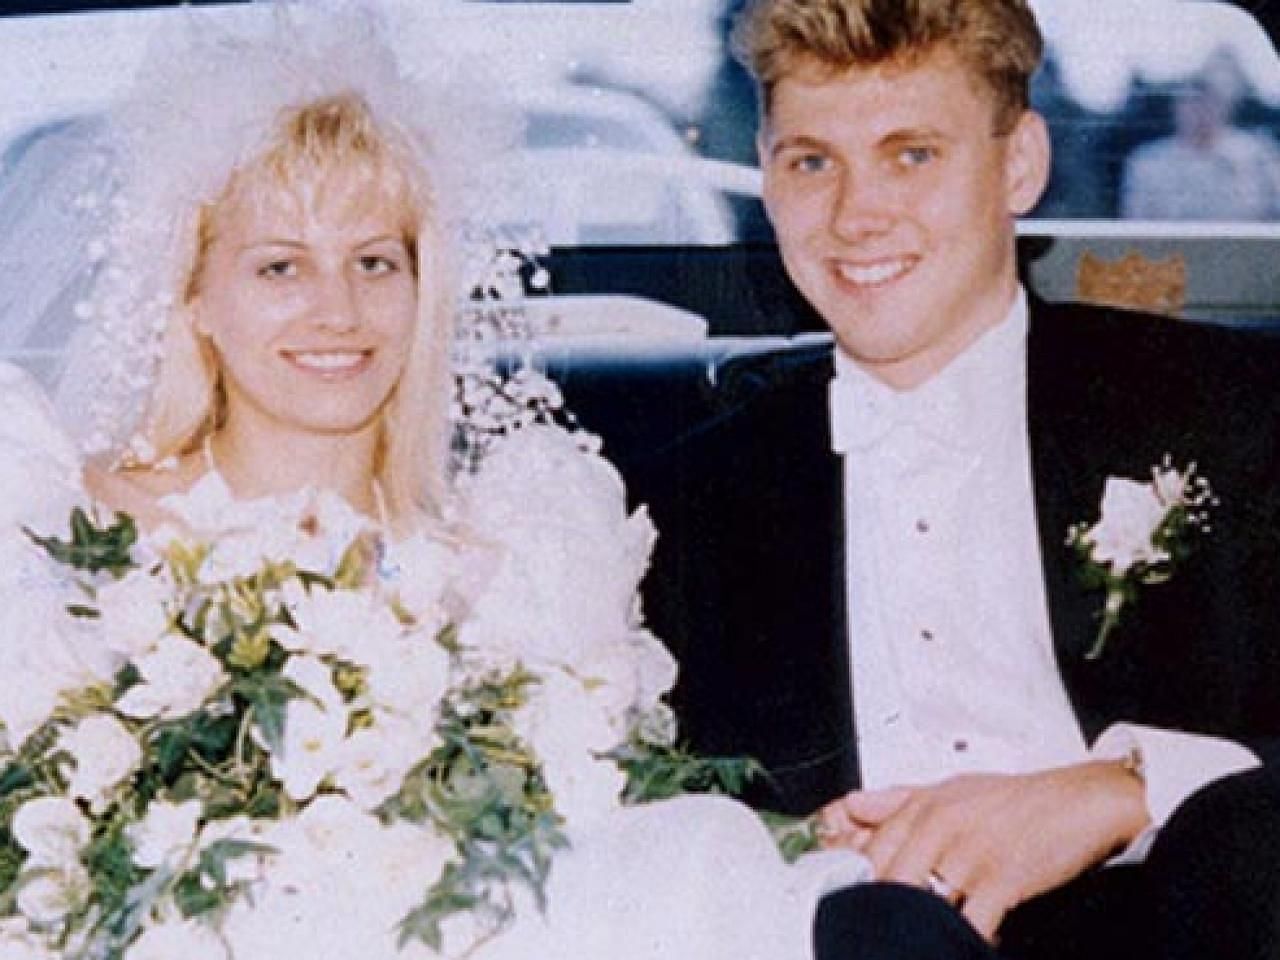 A file picture of Karla Homolka and Paul Bernardo (image via Investigation Discovery)